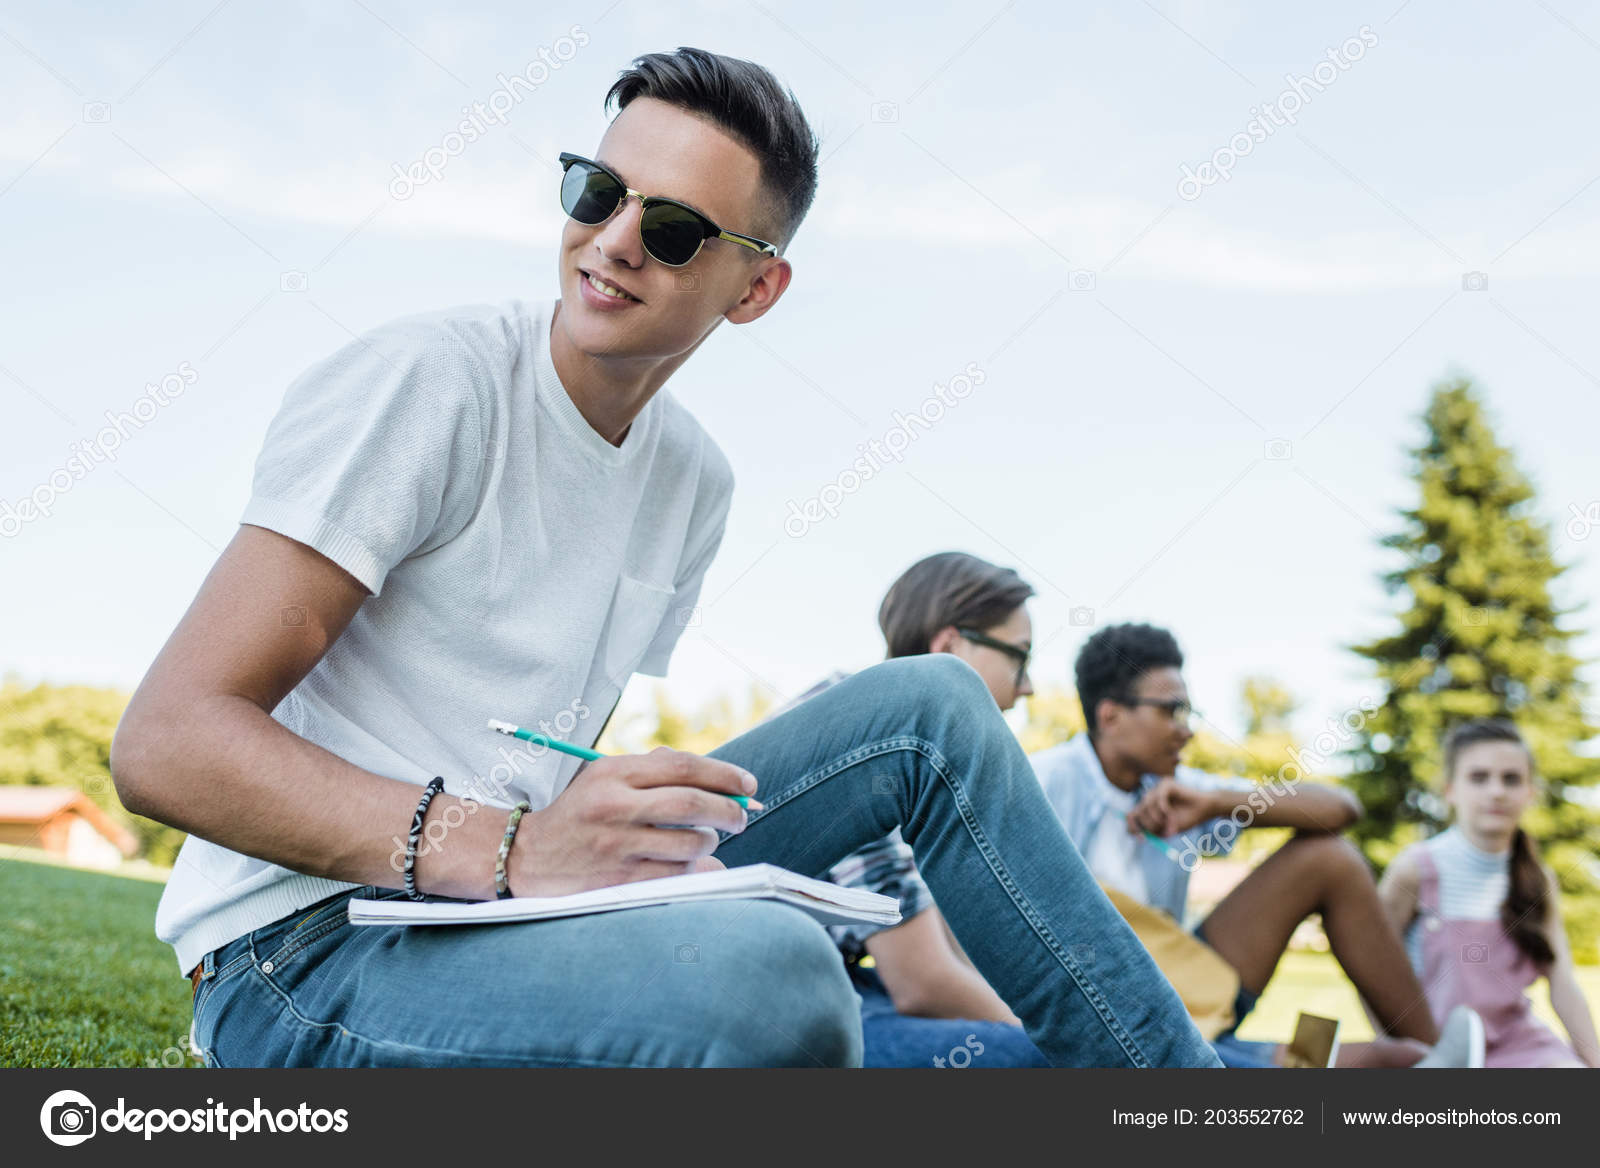 https://st4.depositphotos.com/9880800/20355/i/1600/depositphotos_203552762-stock-photo-smiling-teenage-boy-sunglasses-taking.jpg